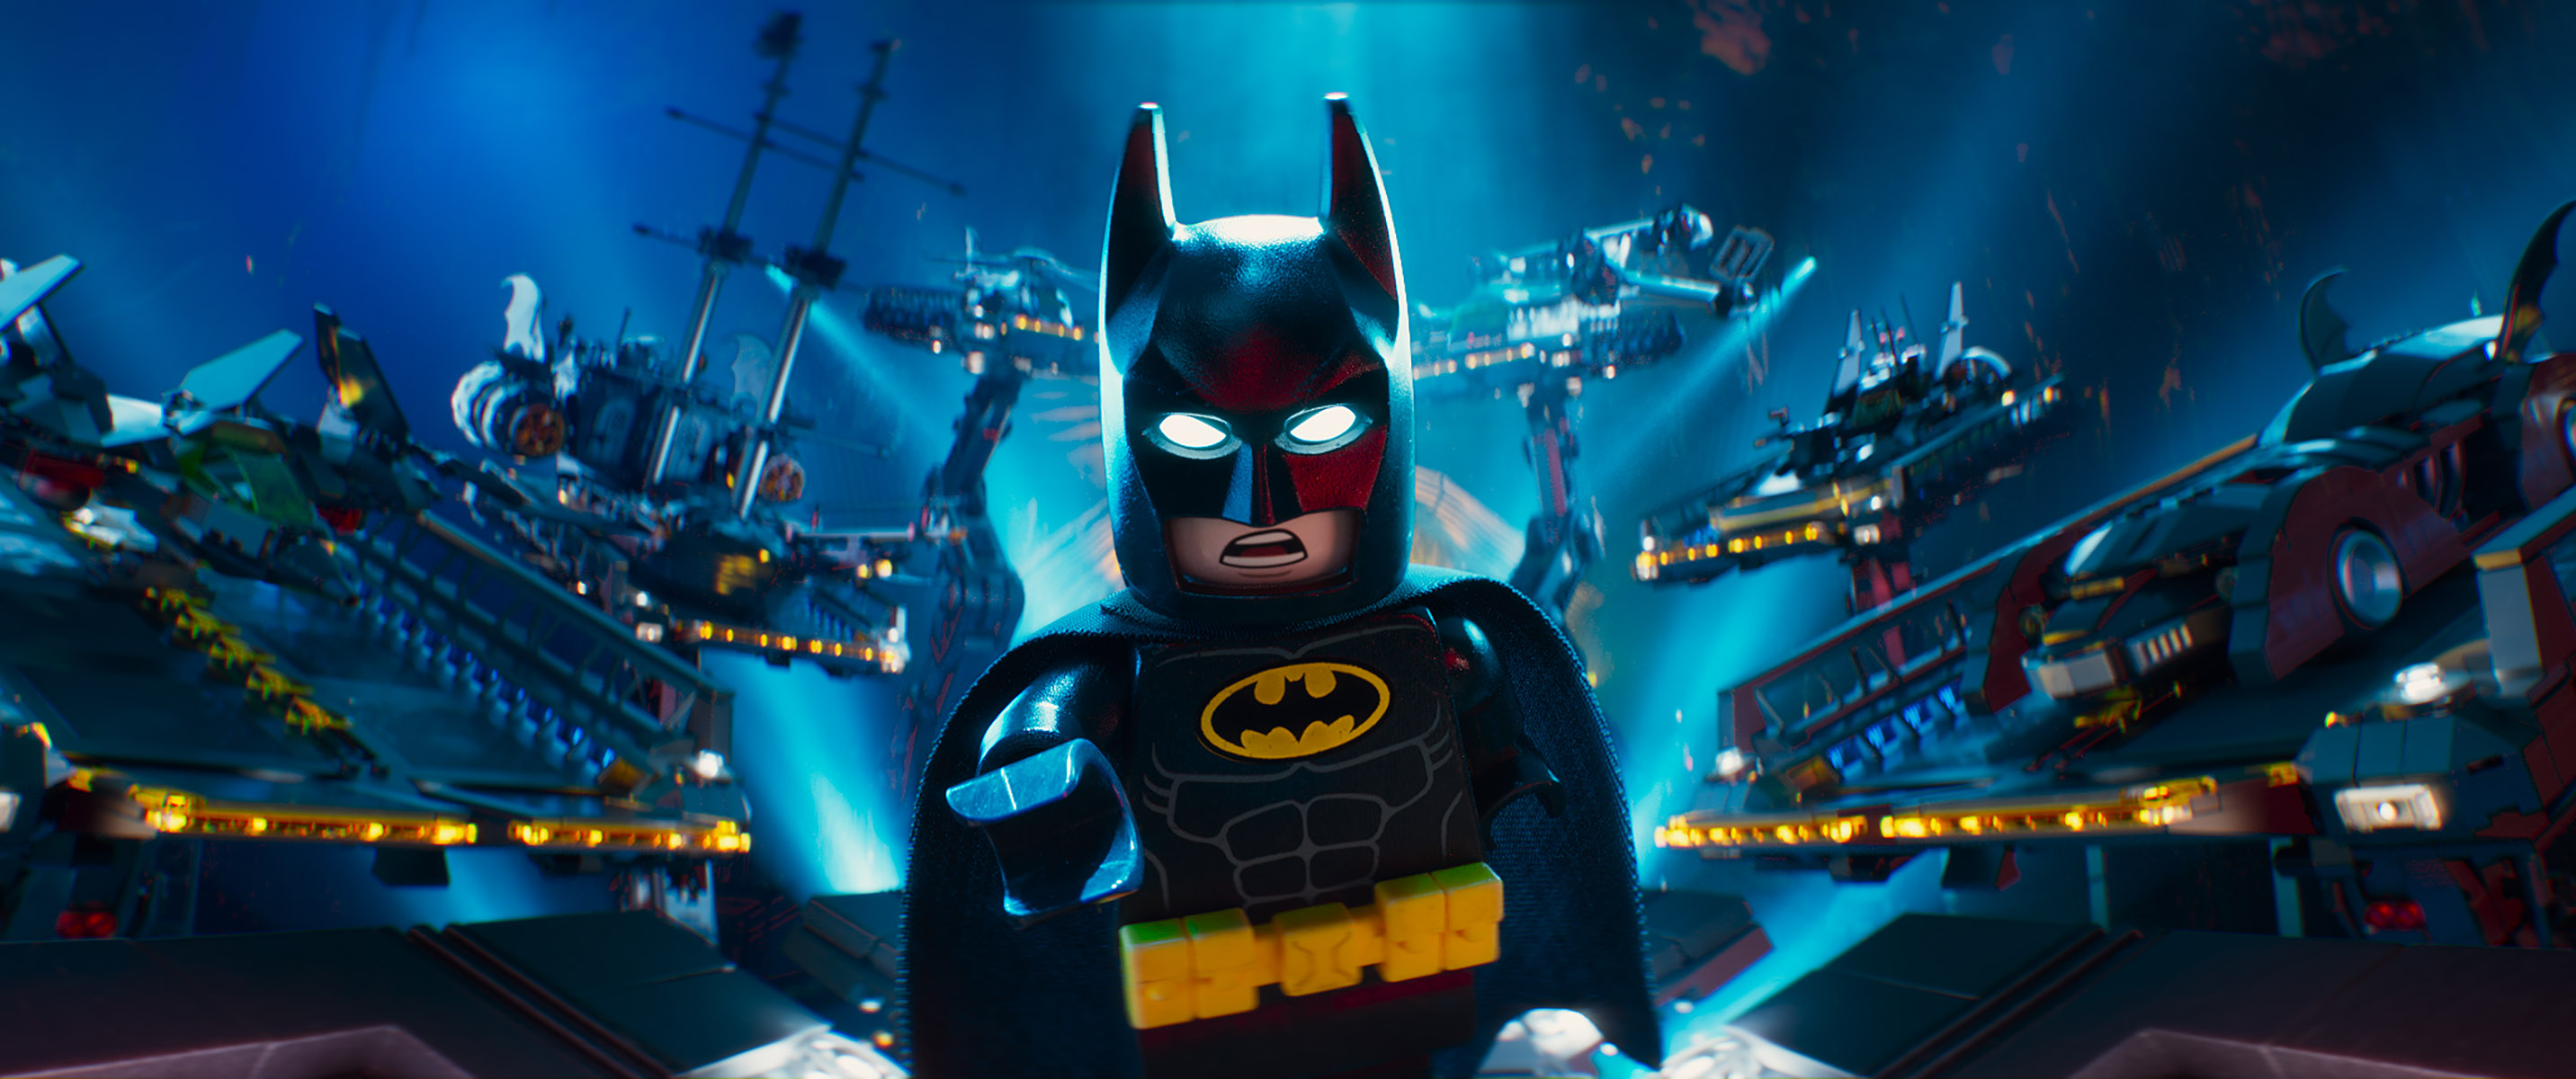 The Lego Batman Movie' Takes Advantage of Animation Style | The Emory Wheel